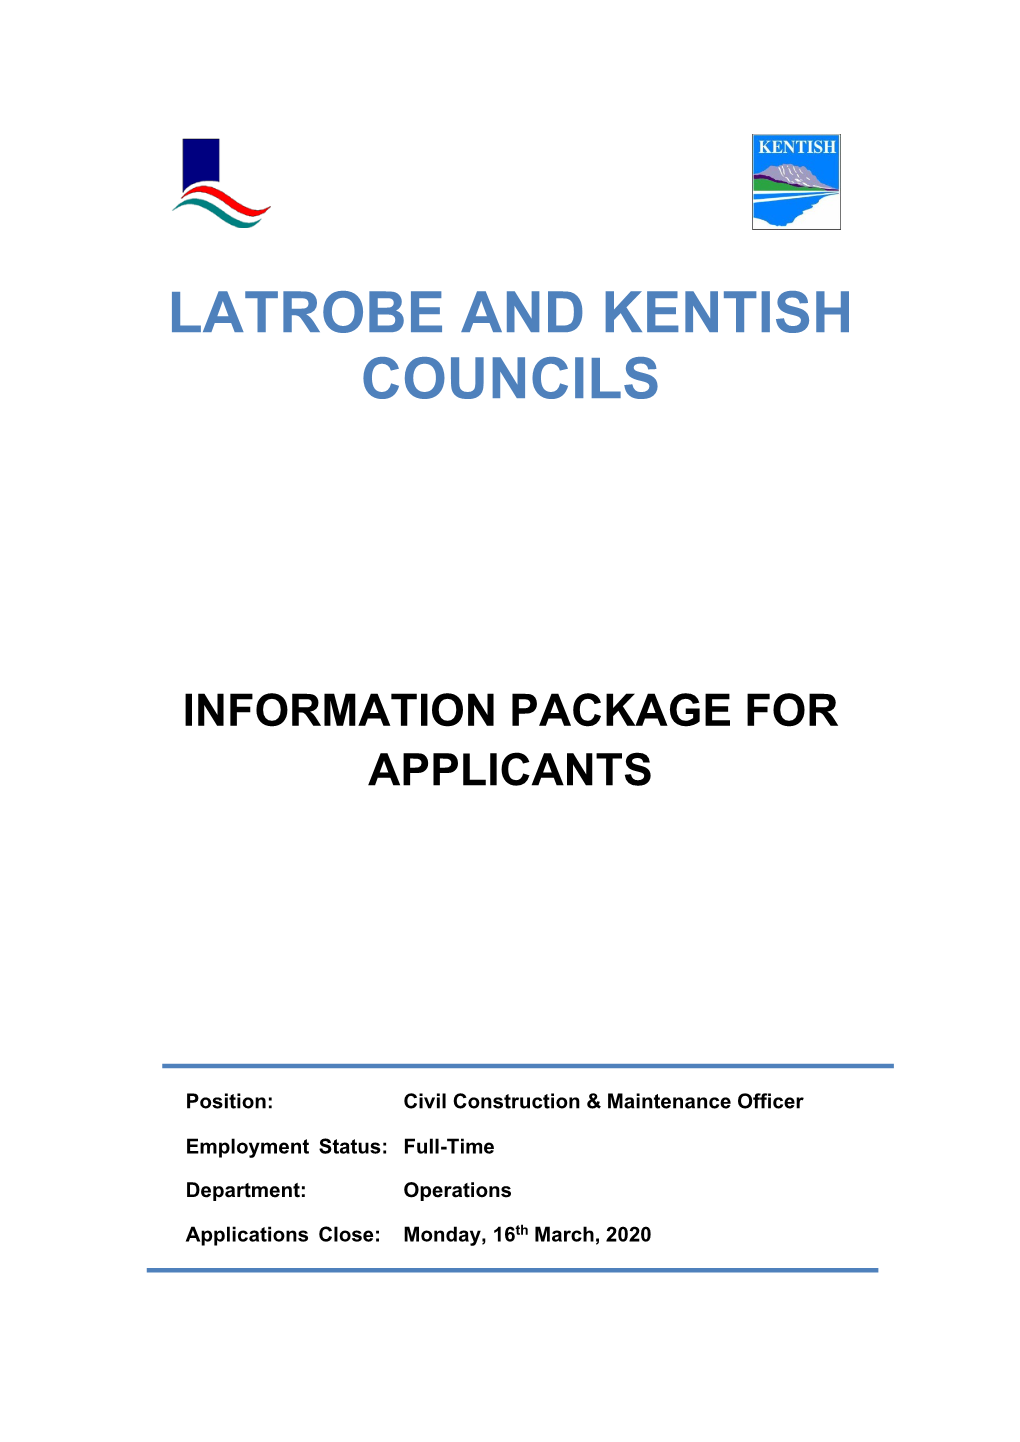 Latrobe and Kentish Councils